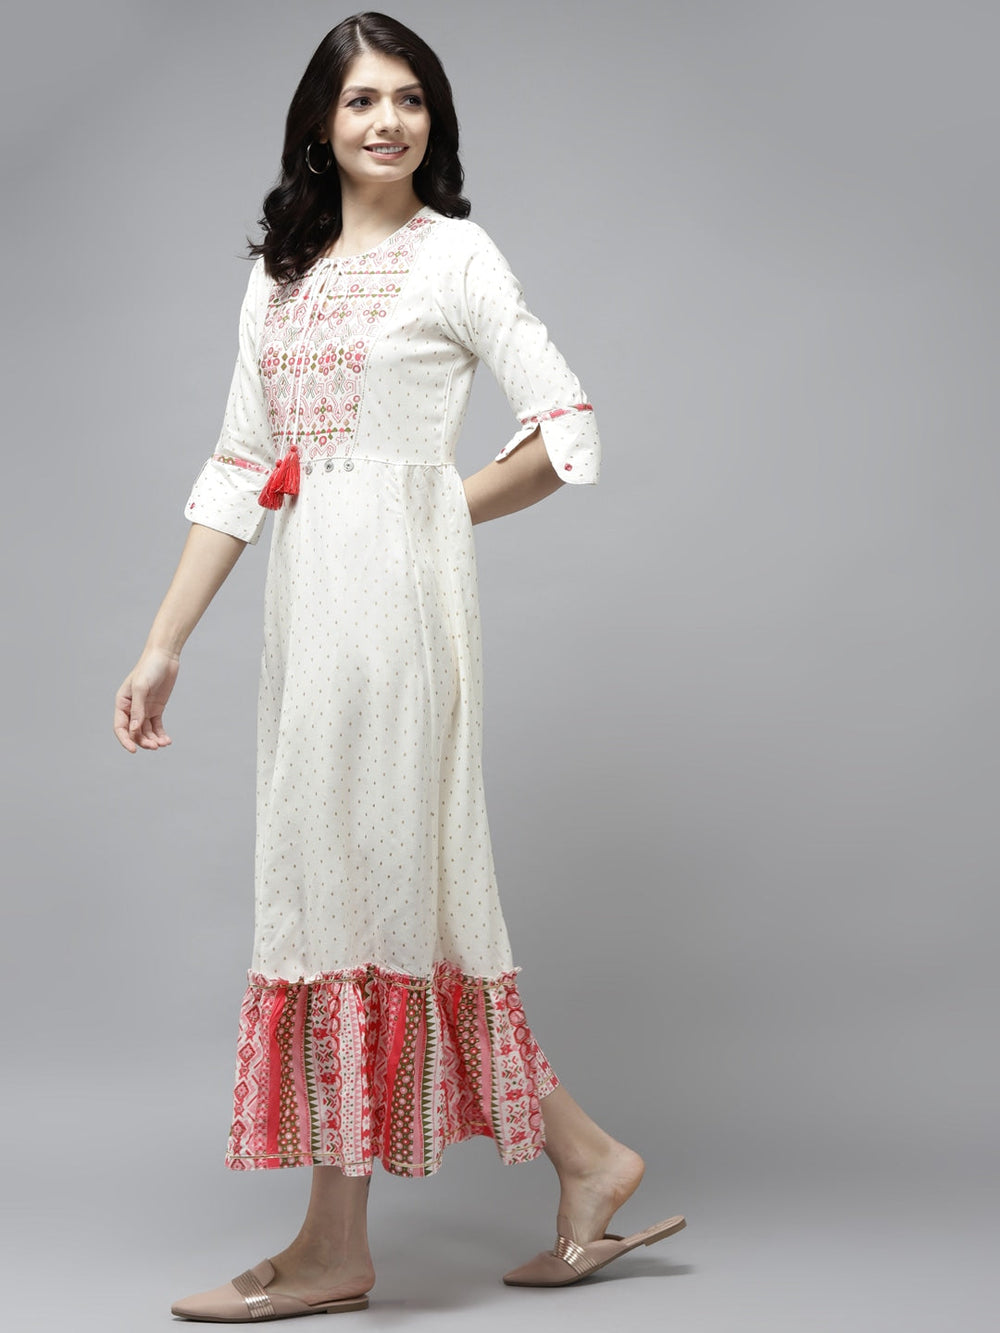 White Ethnic Printed A-Line Dress-Yufta Store-5801DRSWHS